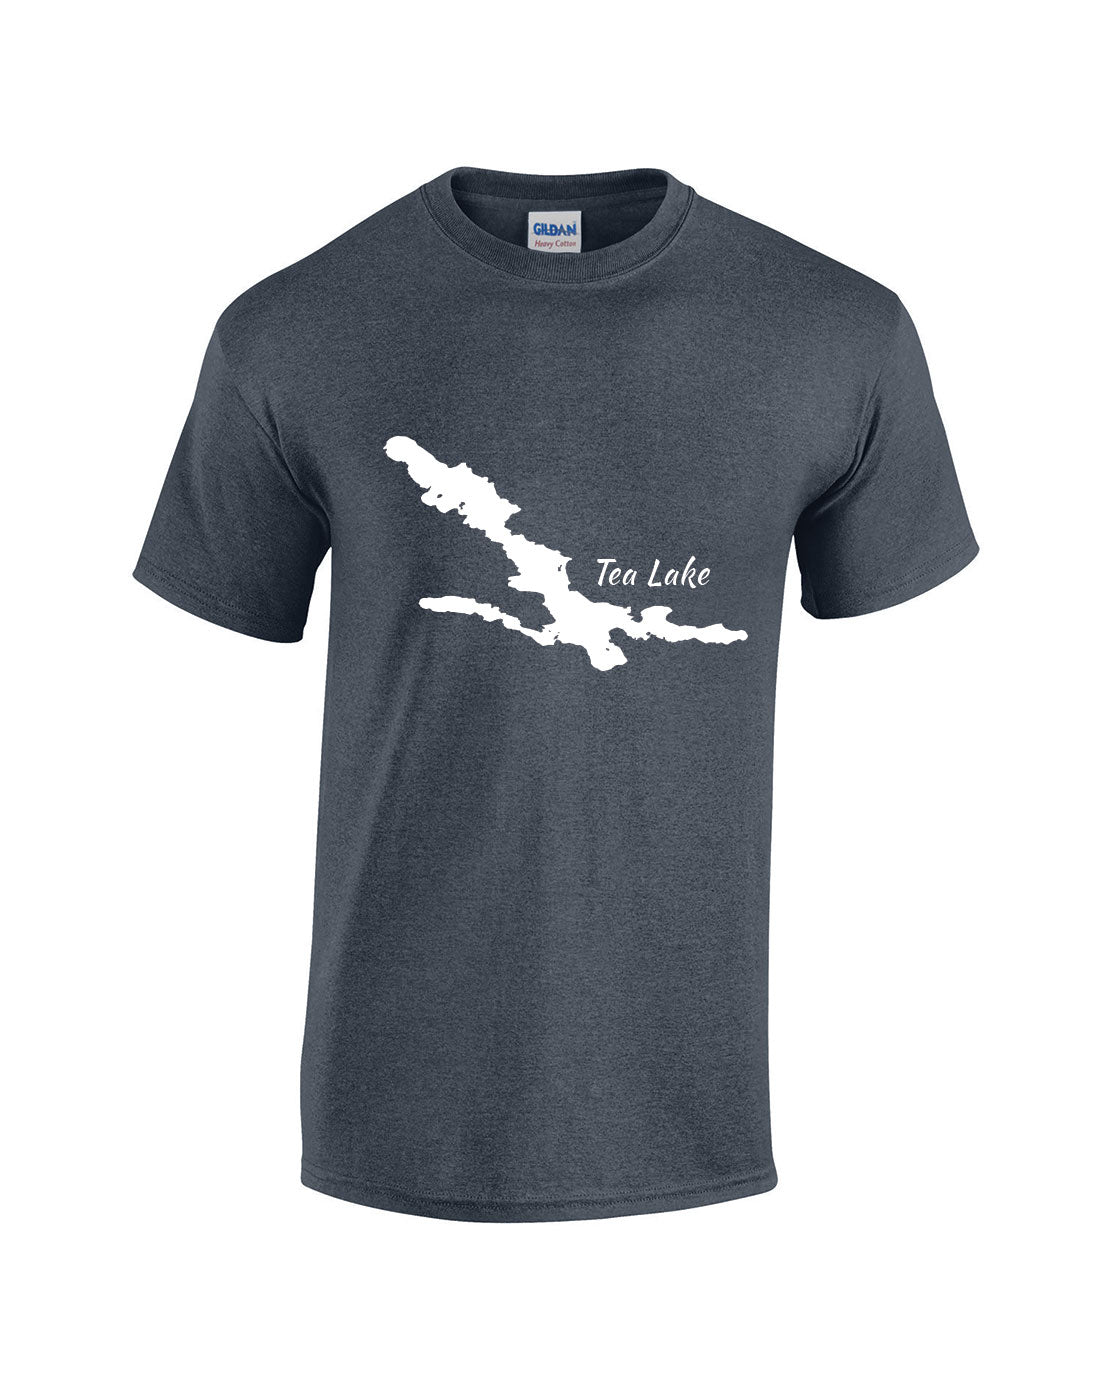 Tea Lake T-Shirt